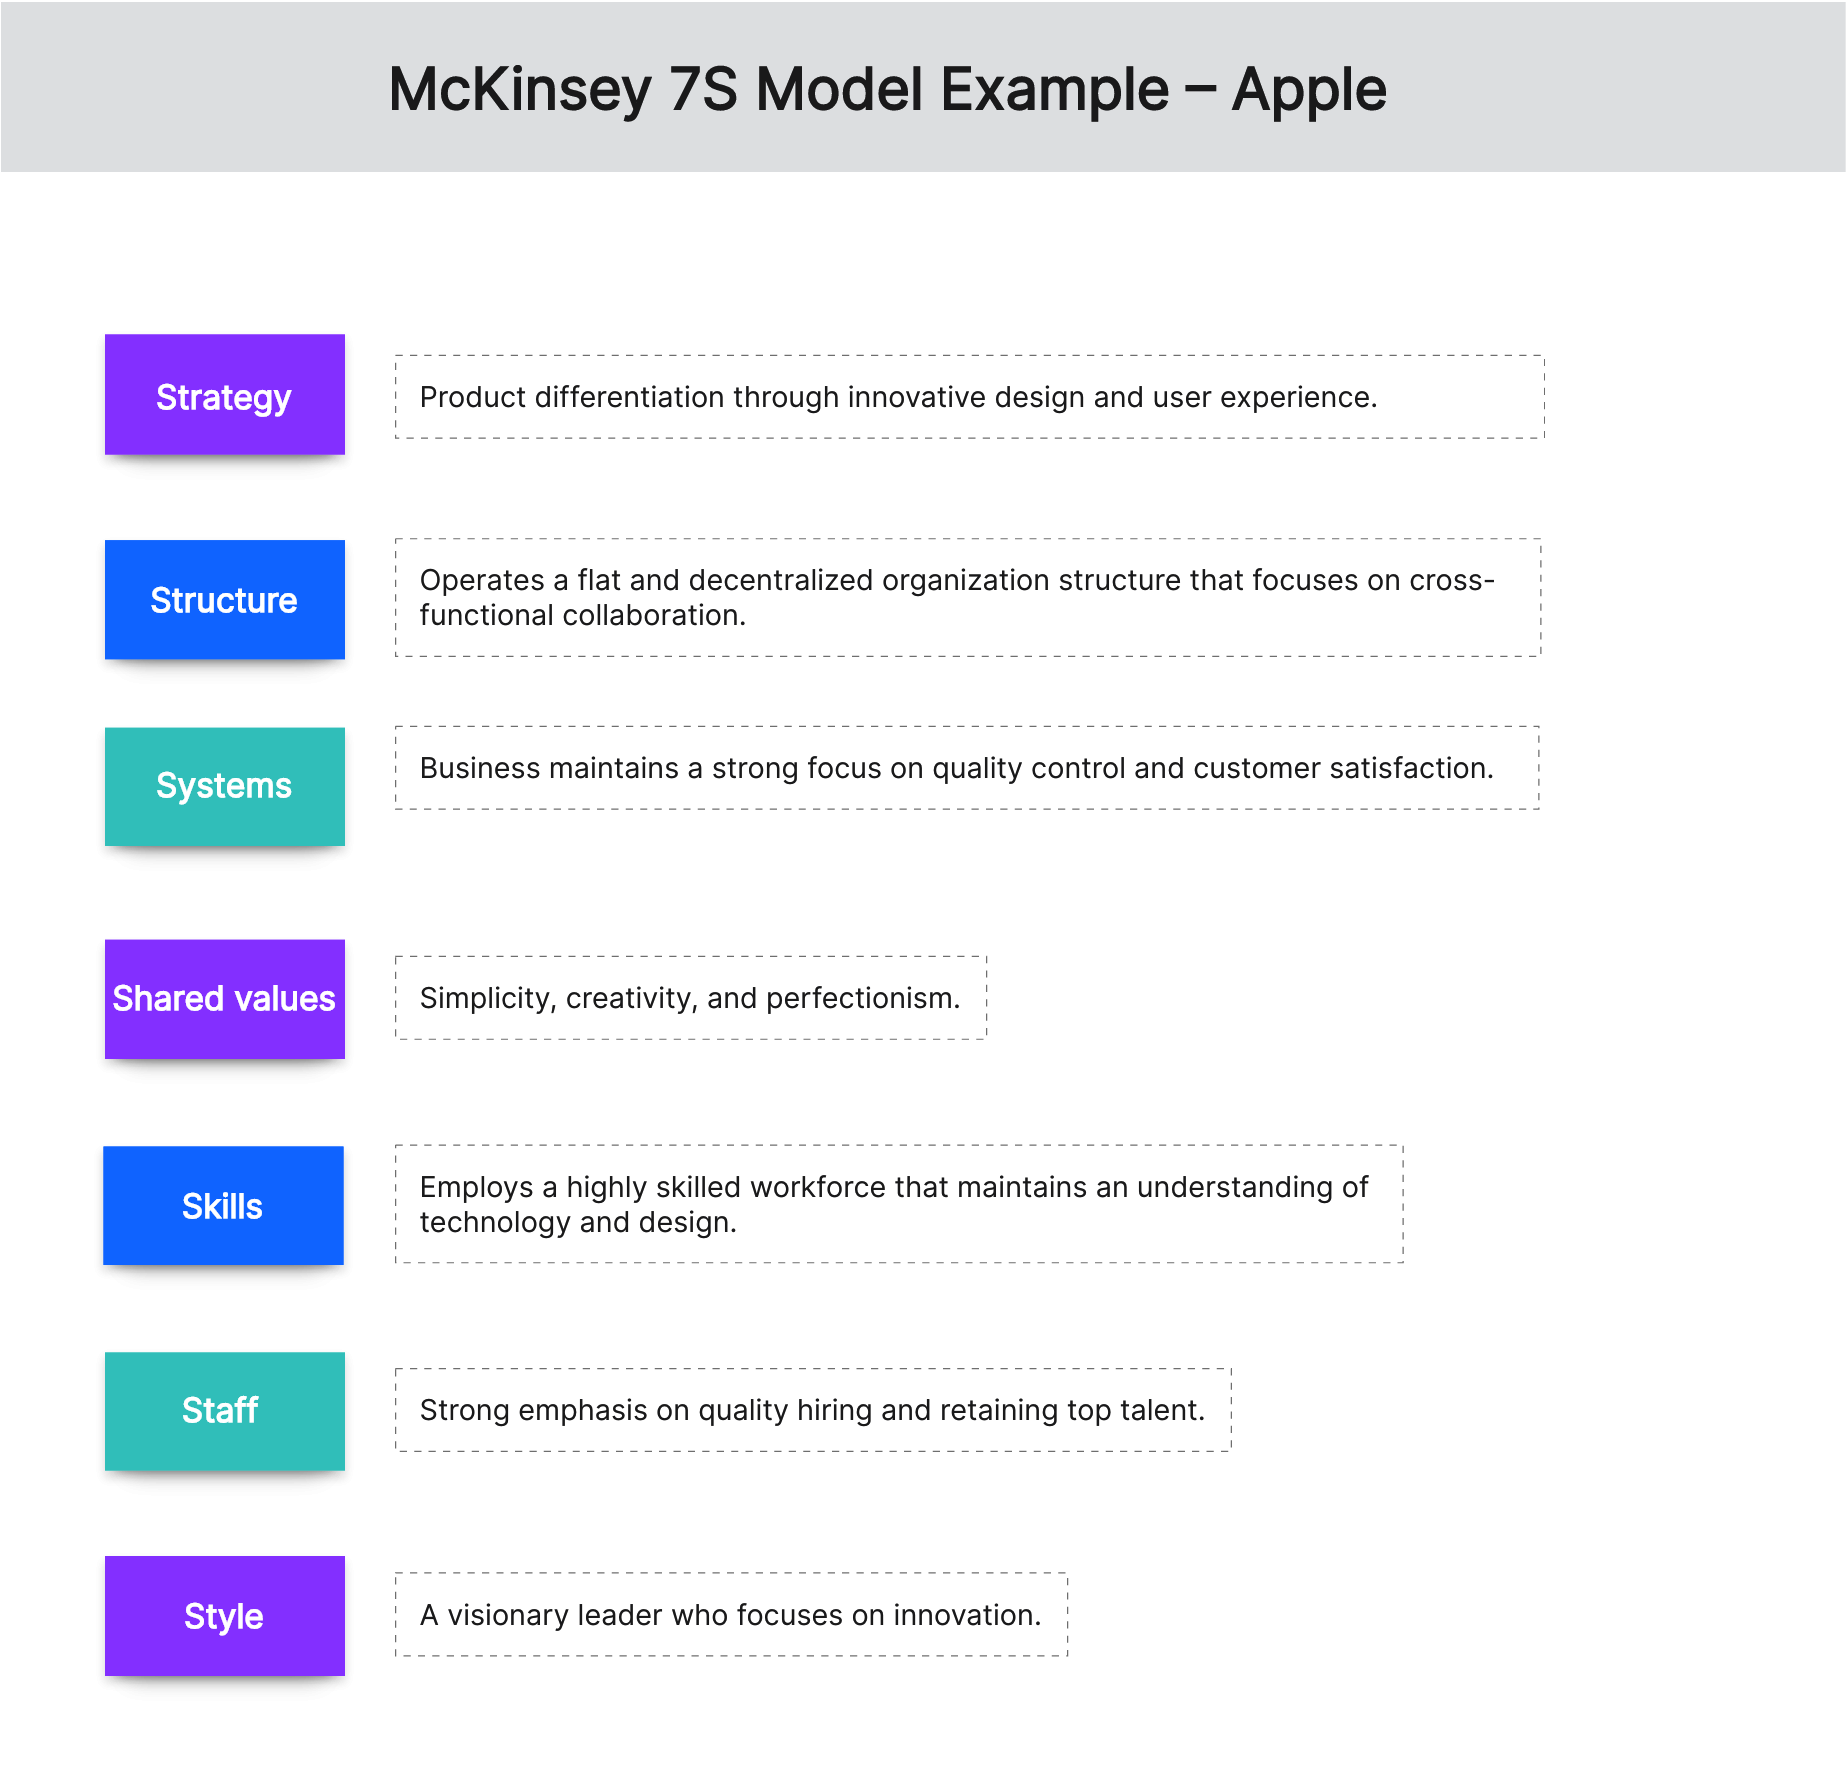 mckinsey-7s-model-example-apple